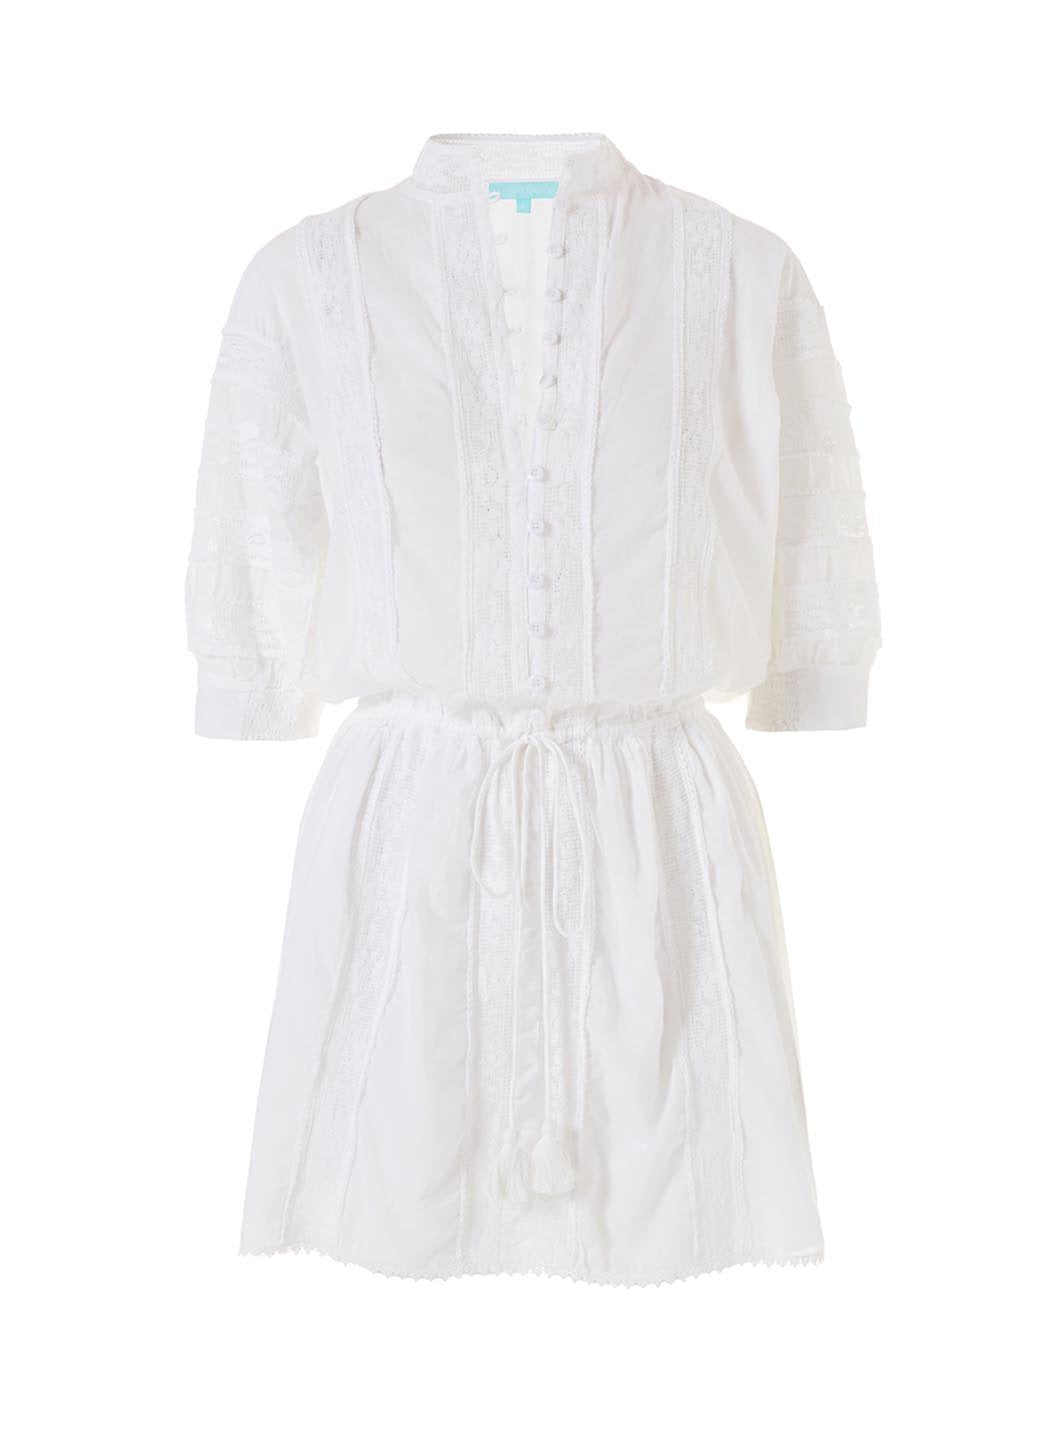 rita white short dress 